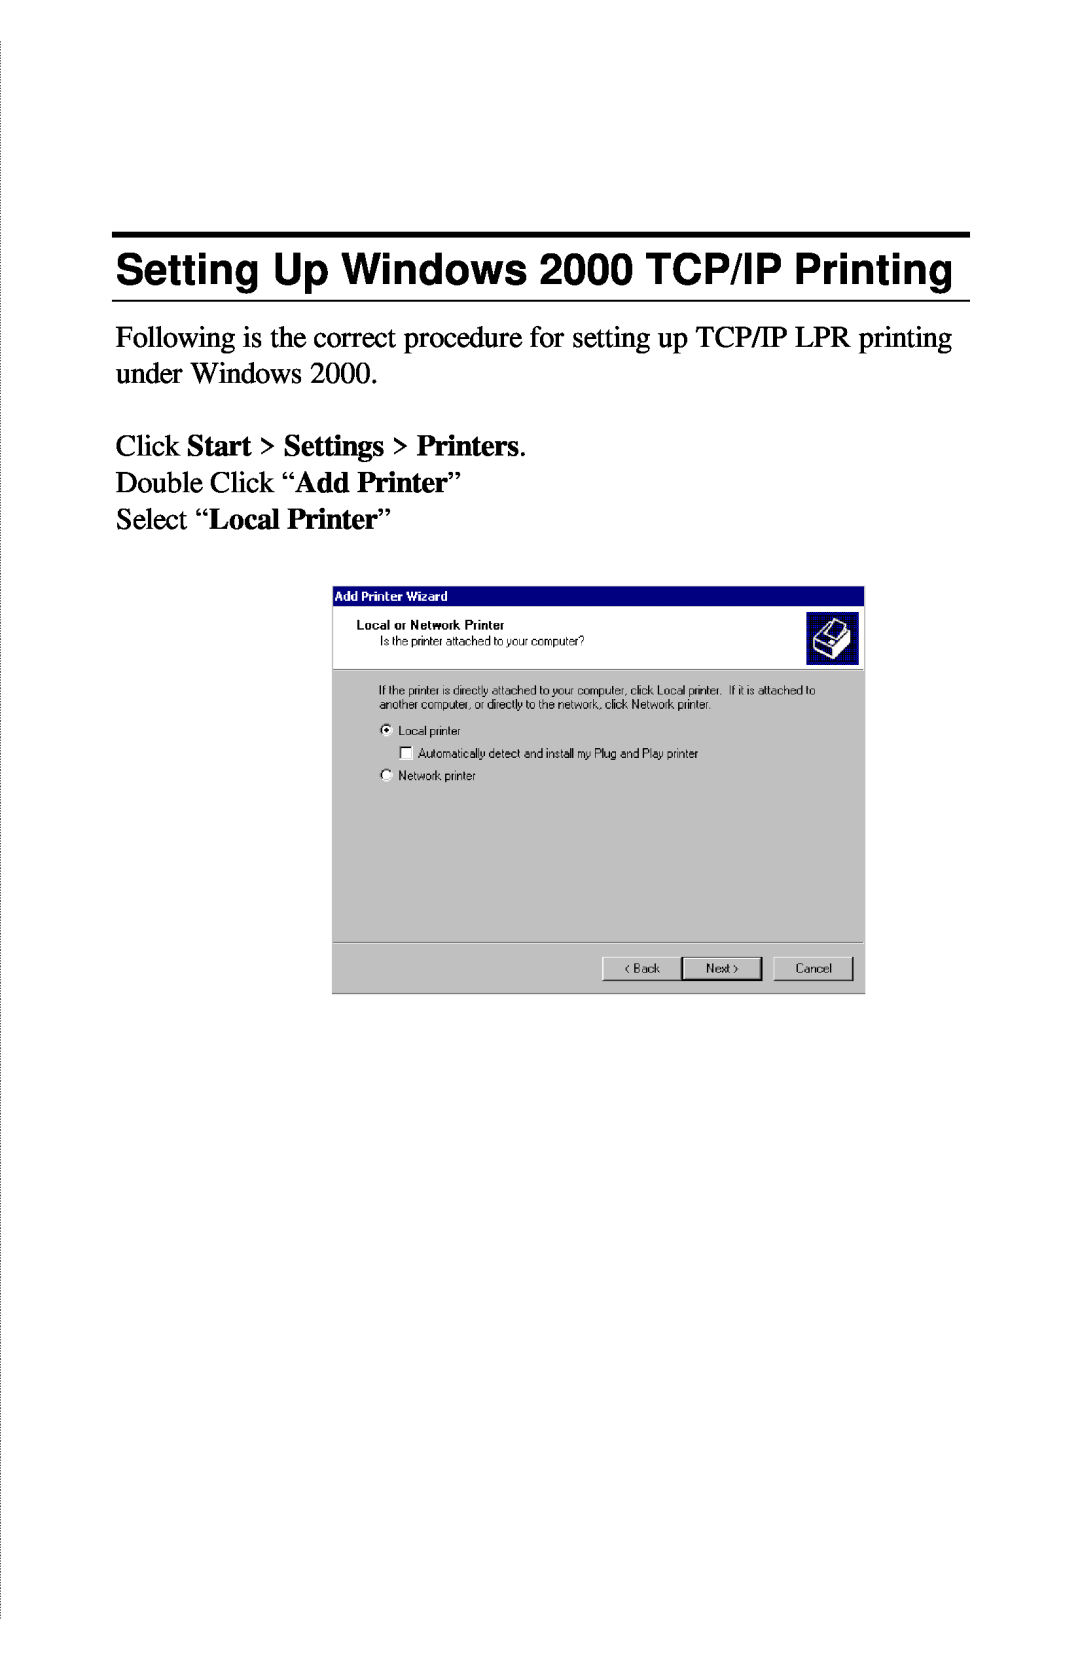 TRENDnet TE100-PIP Setting Up Windows 2000 TCP/IP Printing, Click Start Settings Printers, Double Click “Add Printer” 